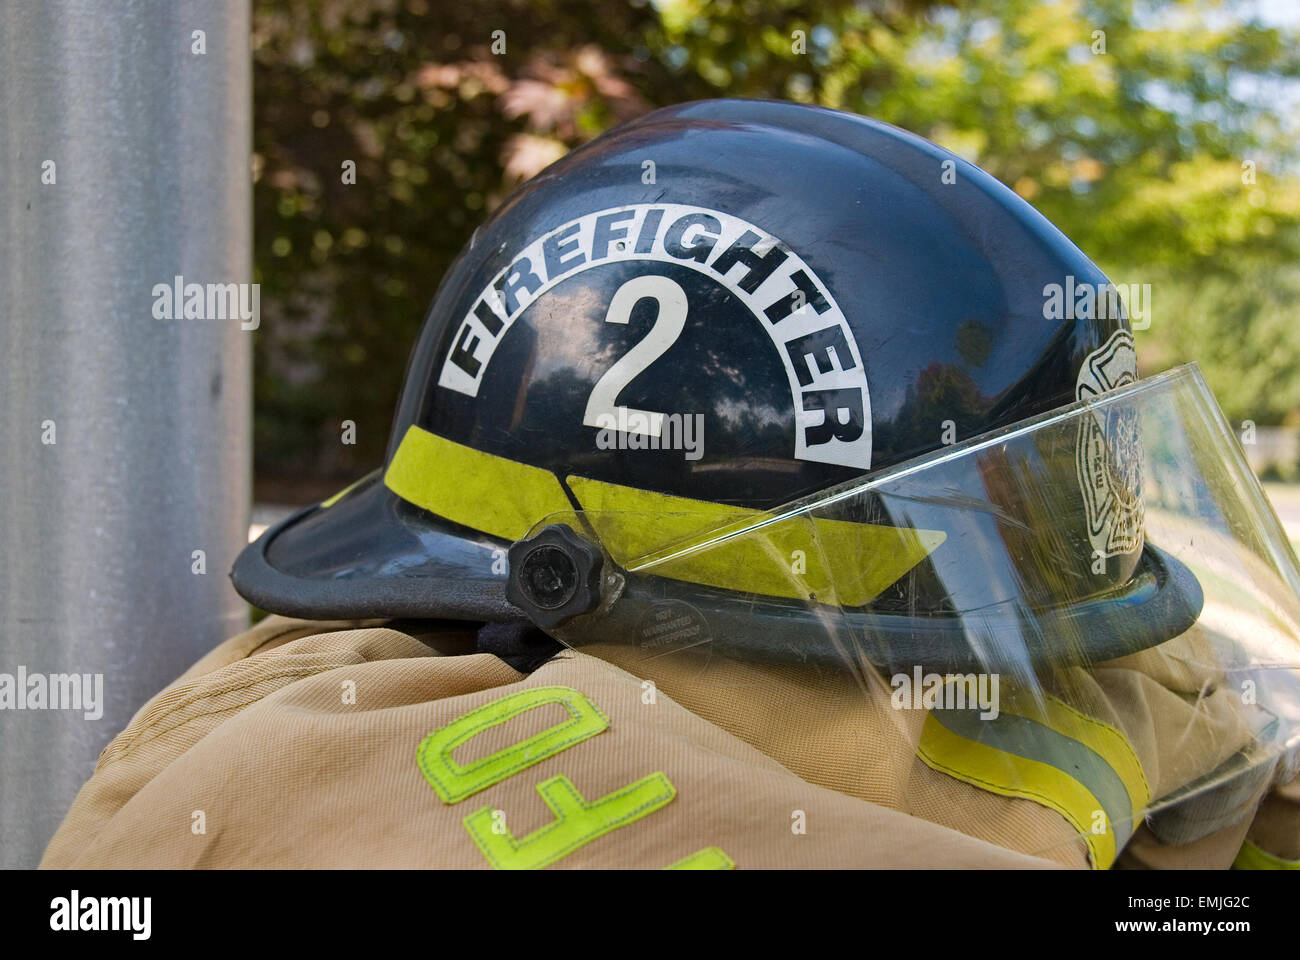 Fireman's helmet on coat. Stock Photo